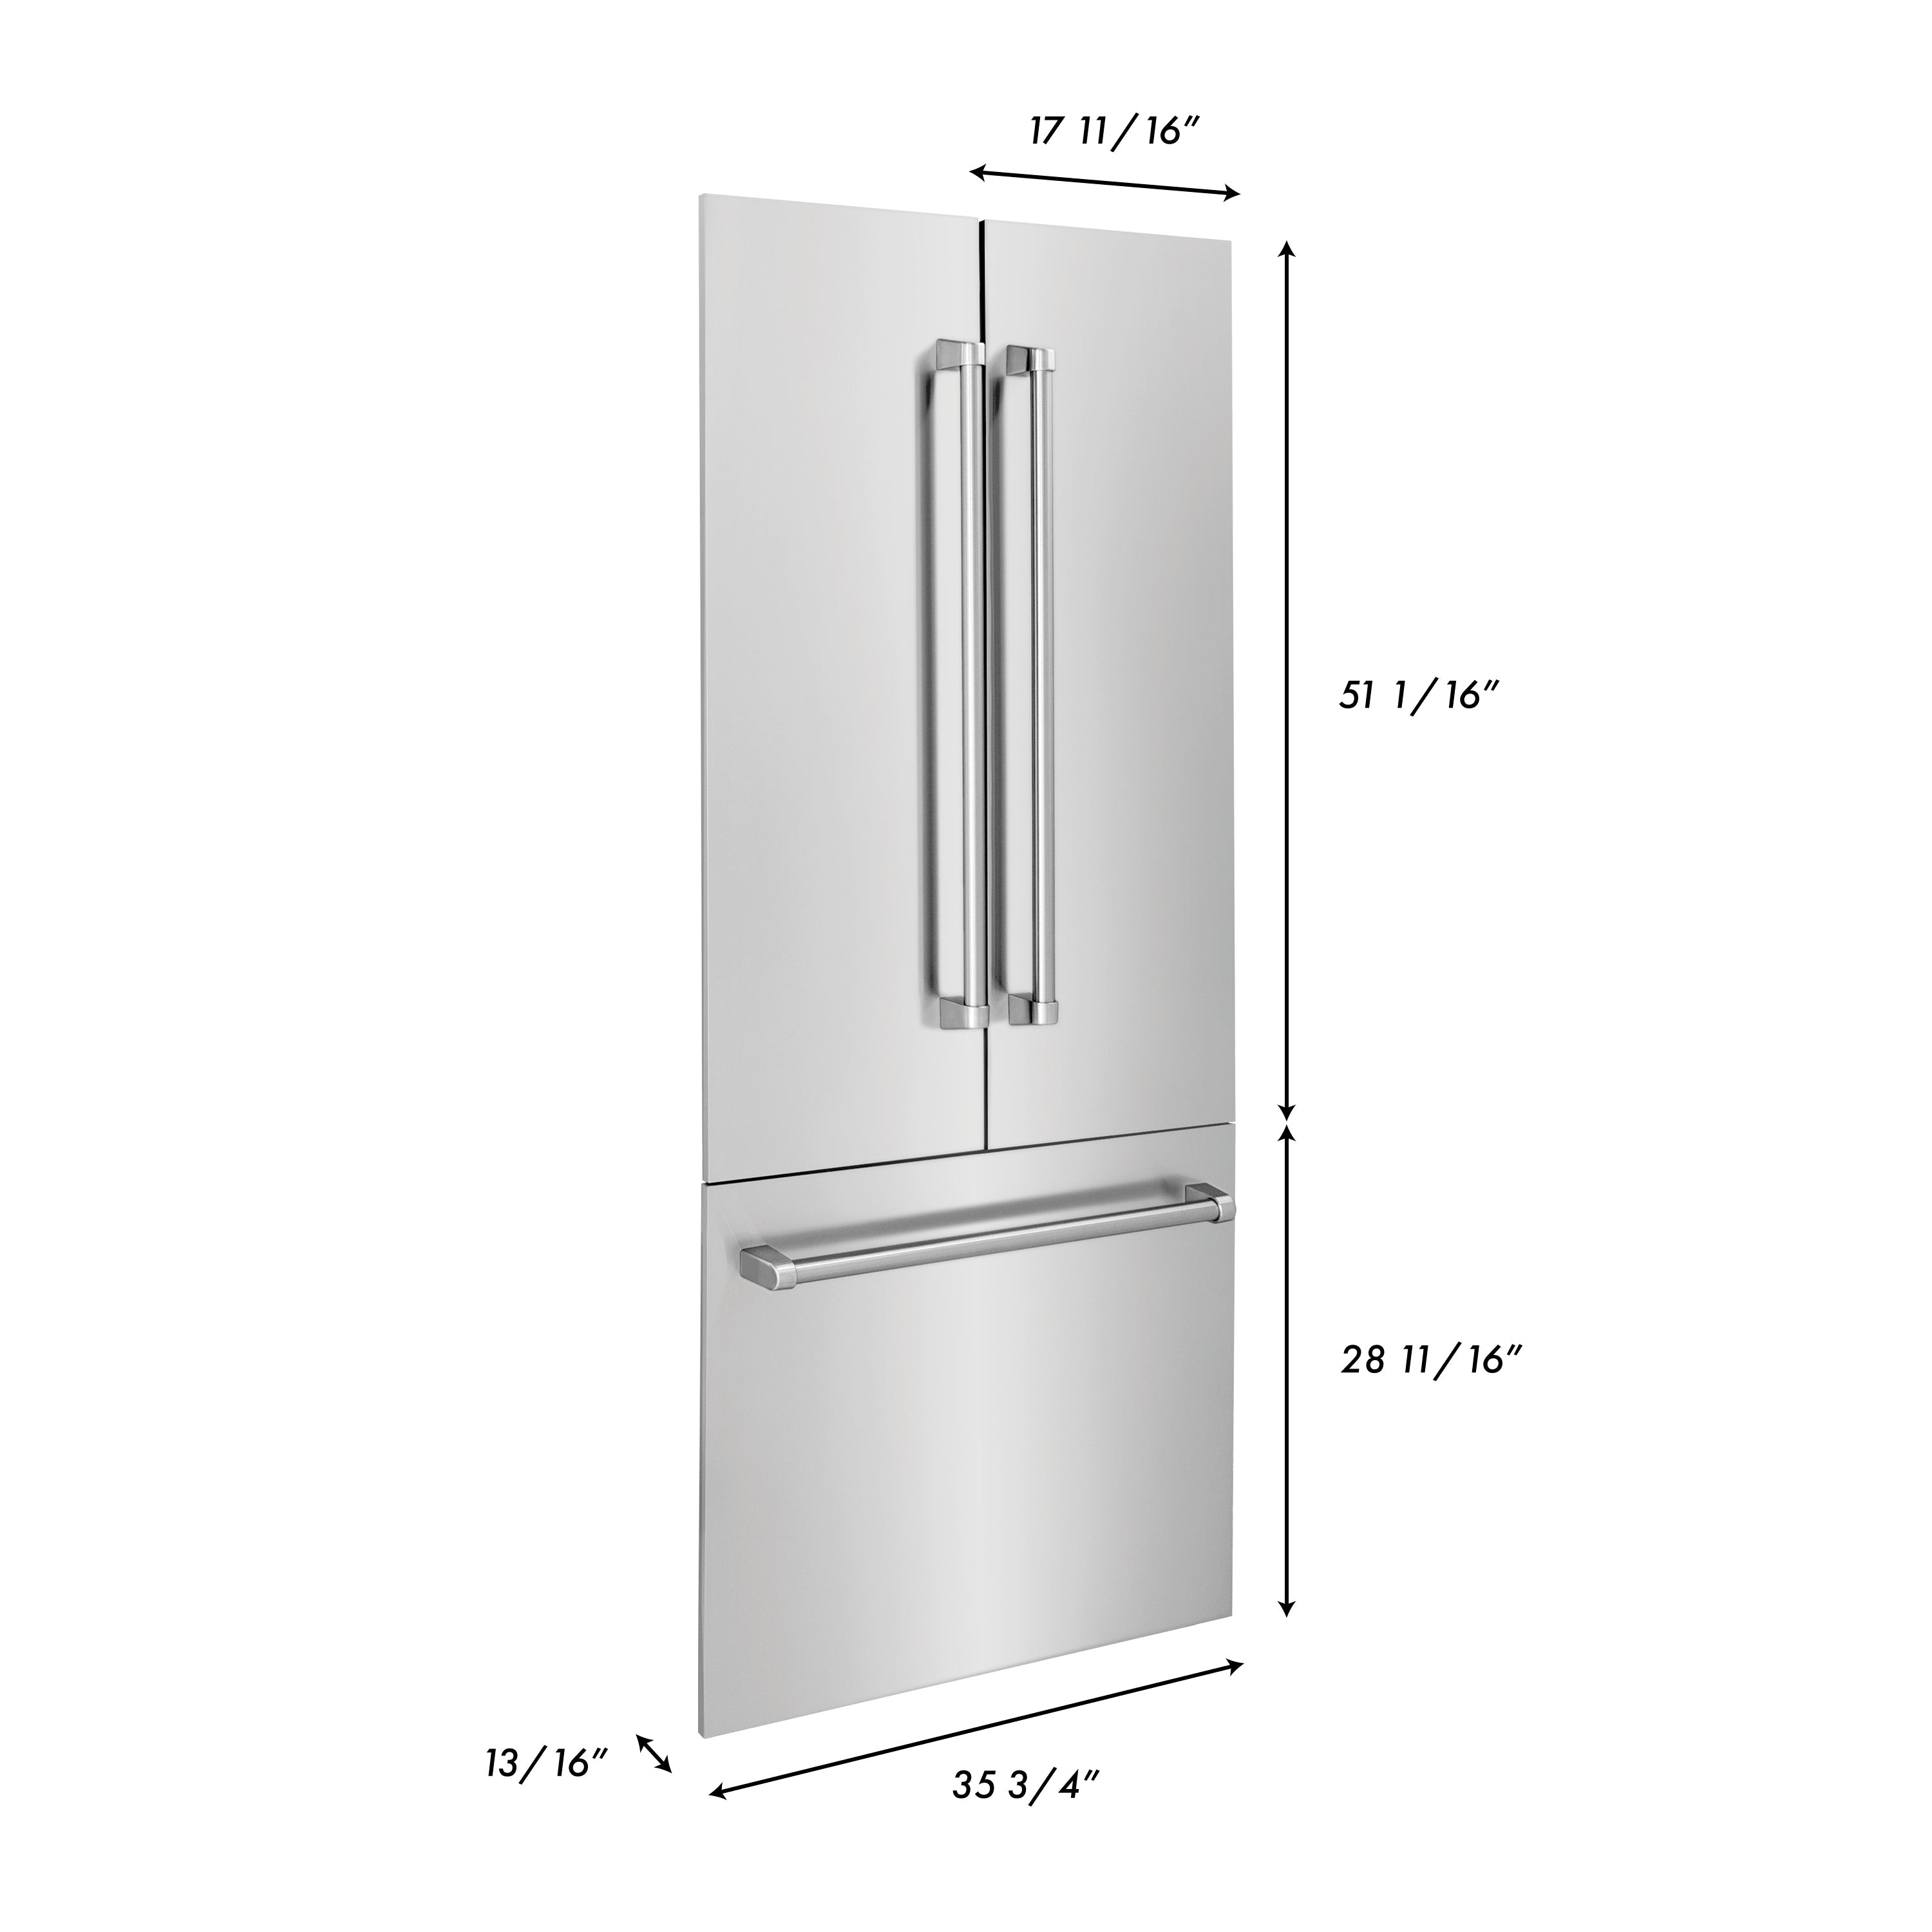 ZLINE 36" Refrigerator Panels in Fingerprint Resistant Stainless Steel for a 36" Buit-in Refrigerator (RPBIV-SN-36)